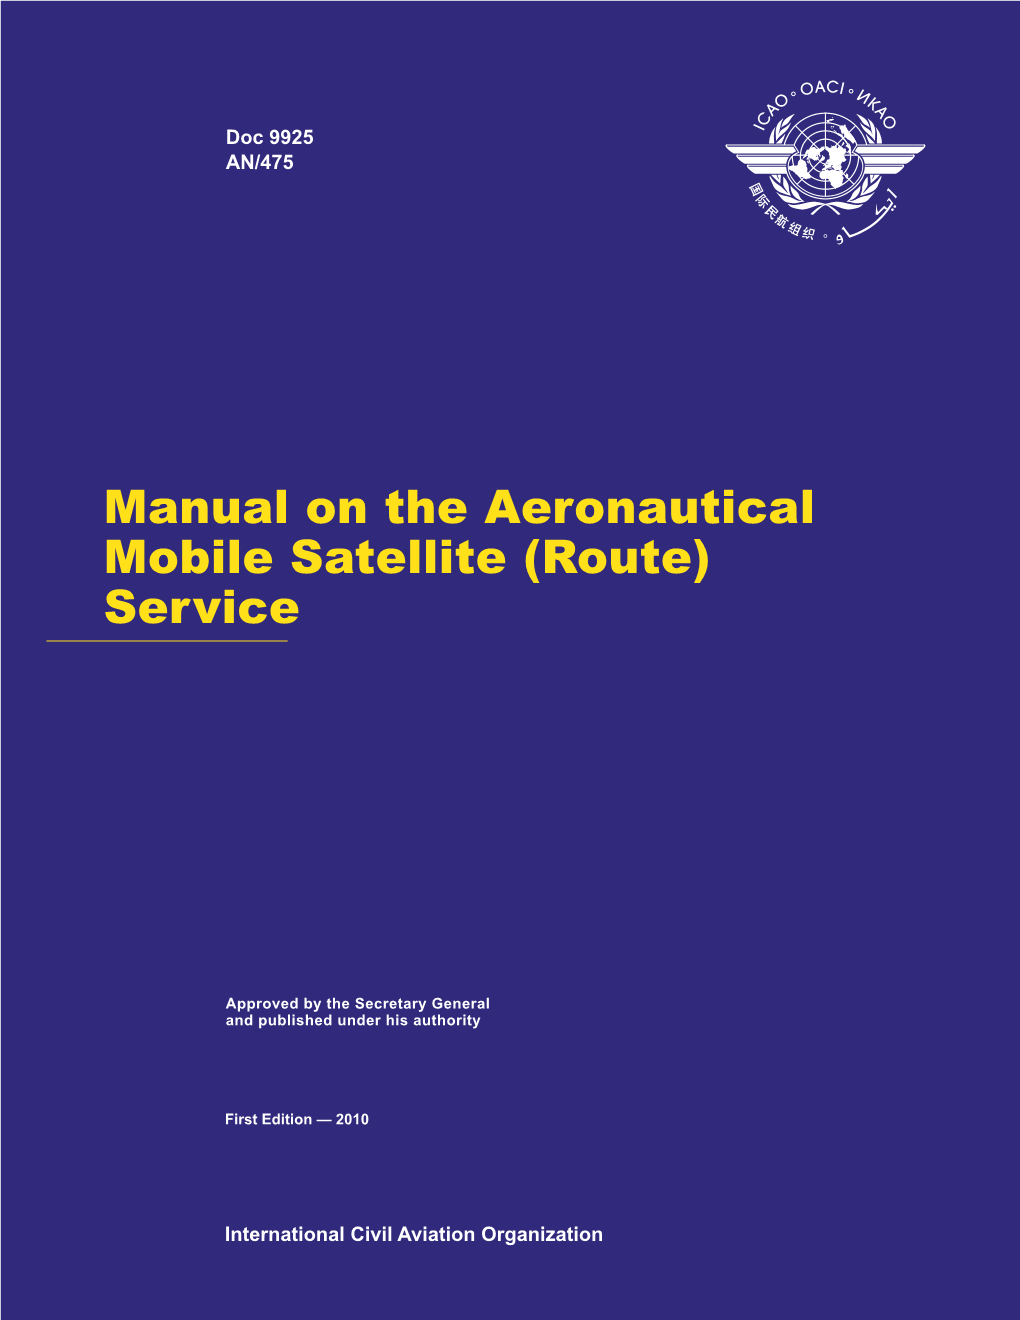 Manual on the Aeronautical Mobile Satellite (Route) Service